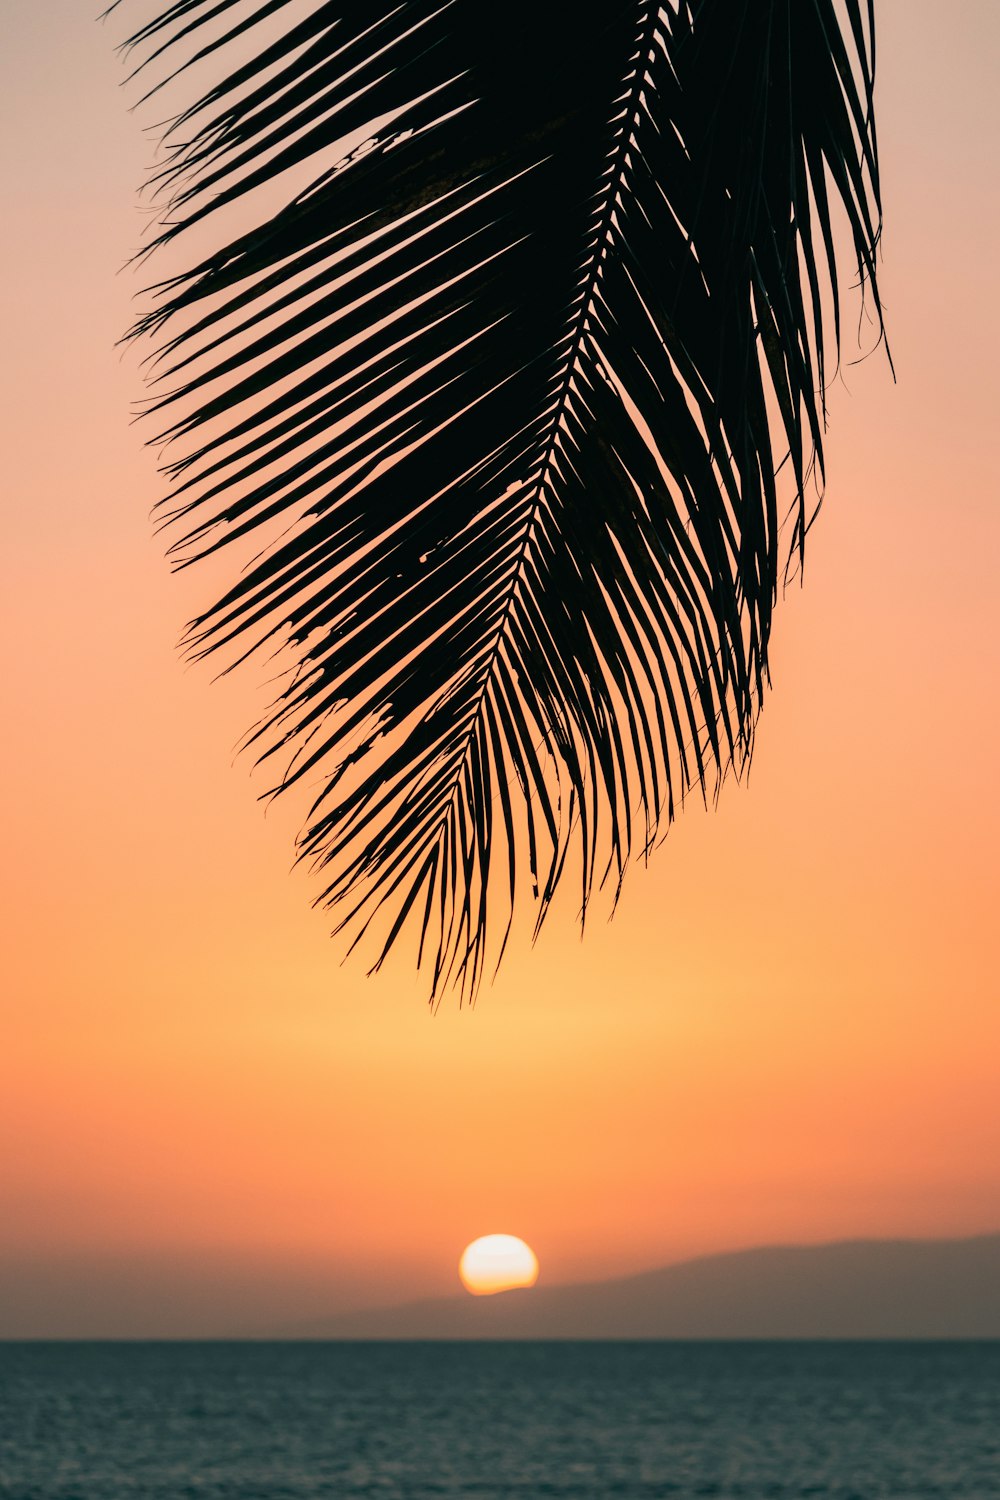 calm ocean at sunset